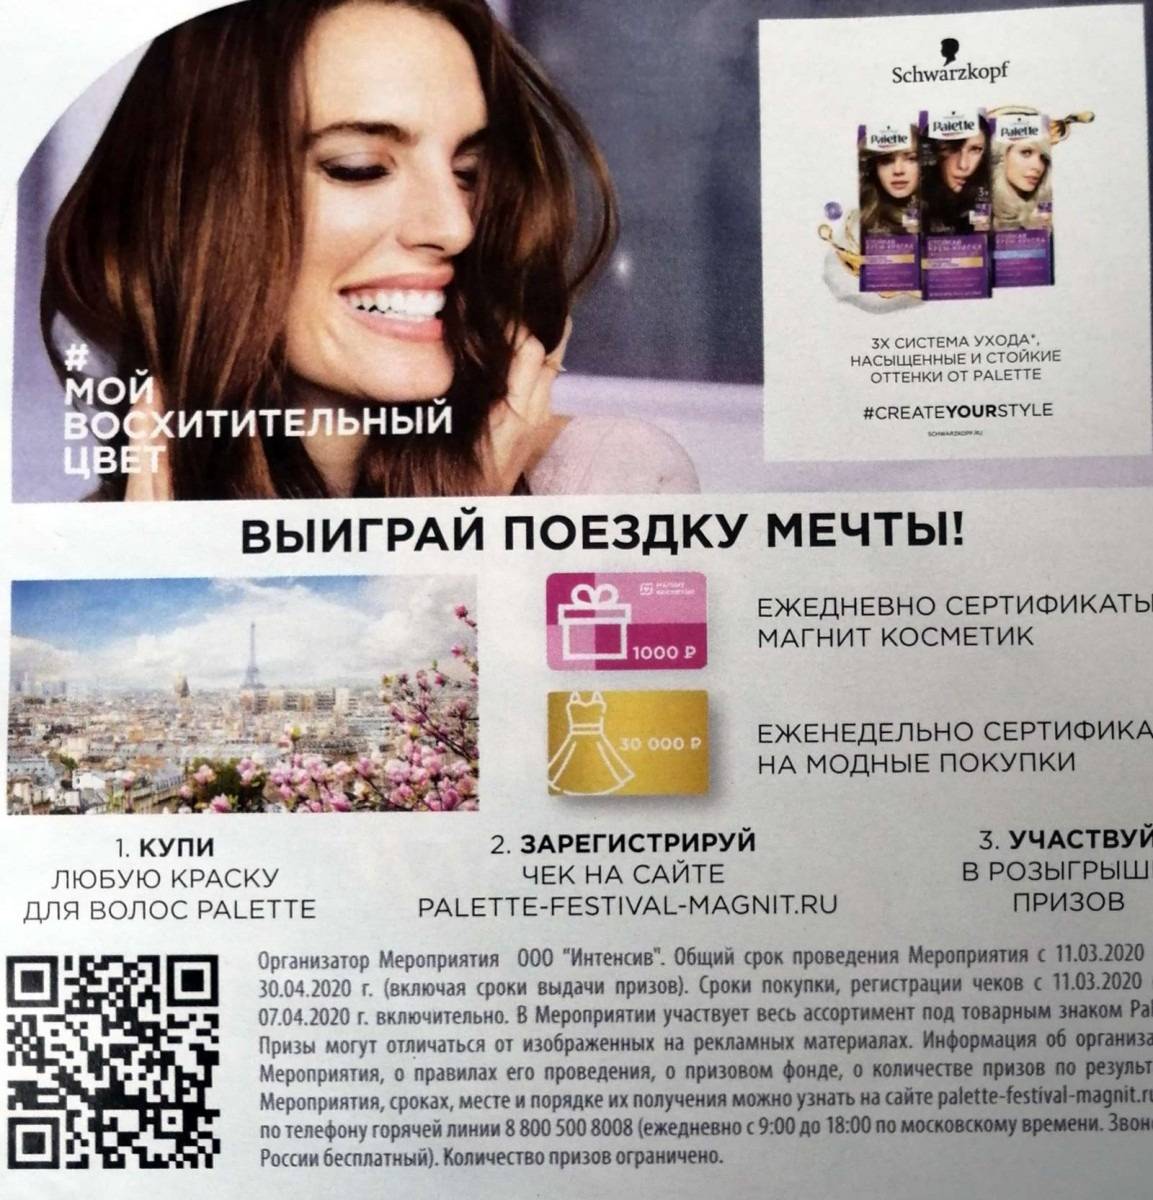 palette-festival-magnit.ru регистрация